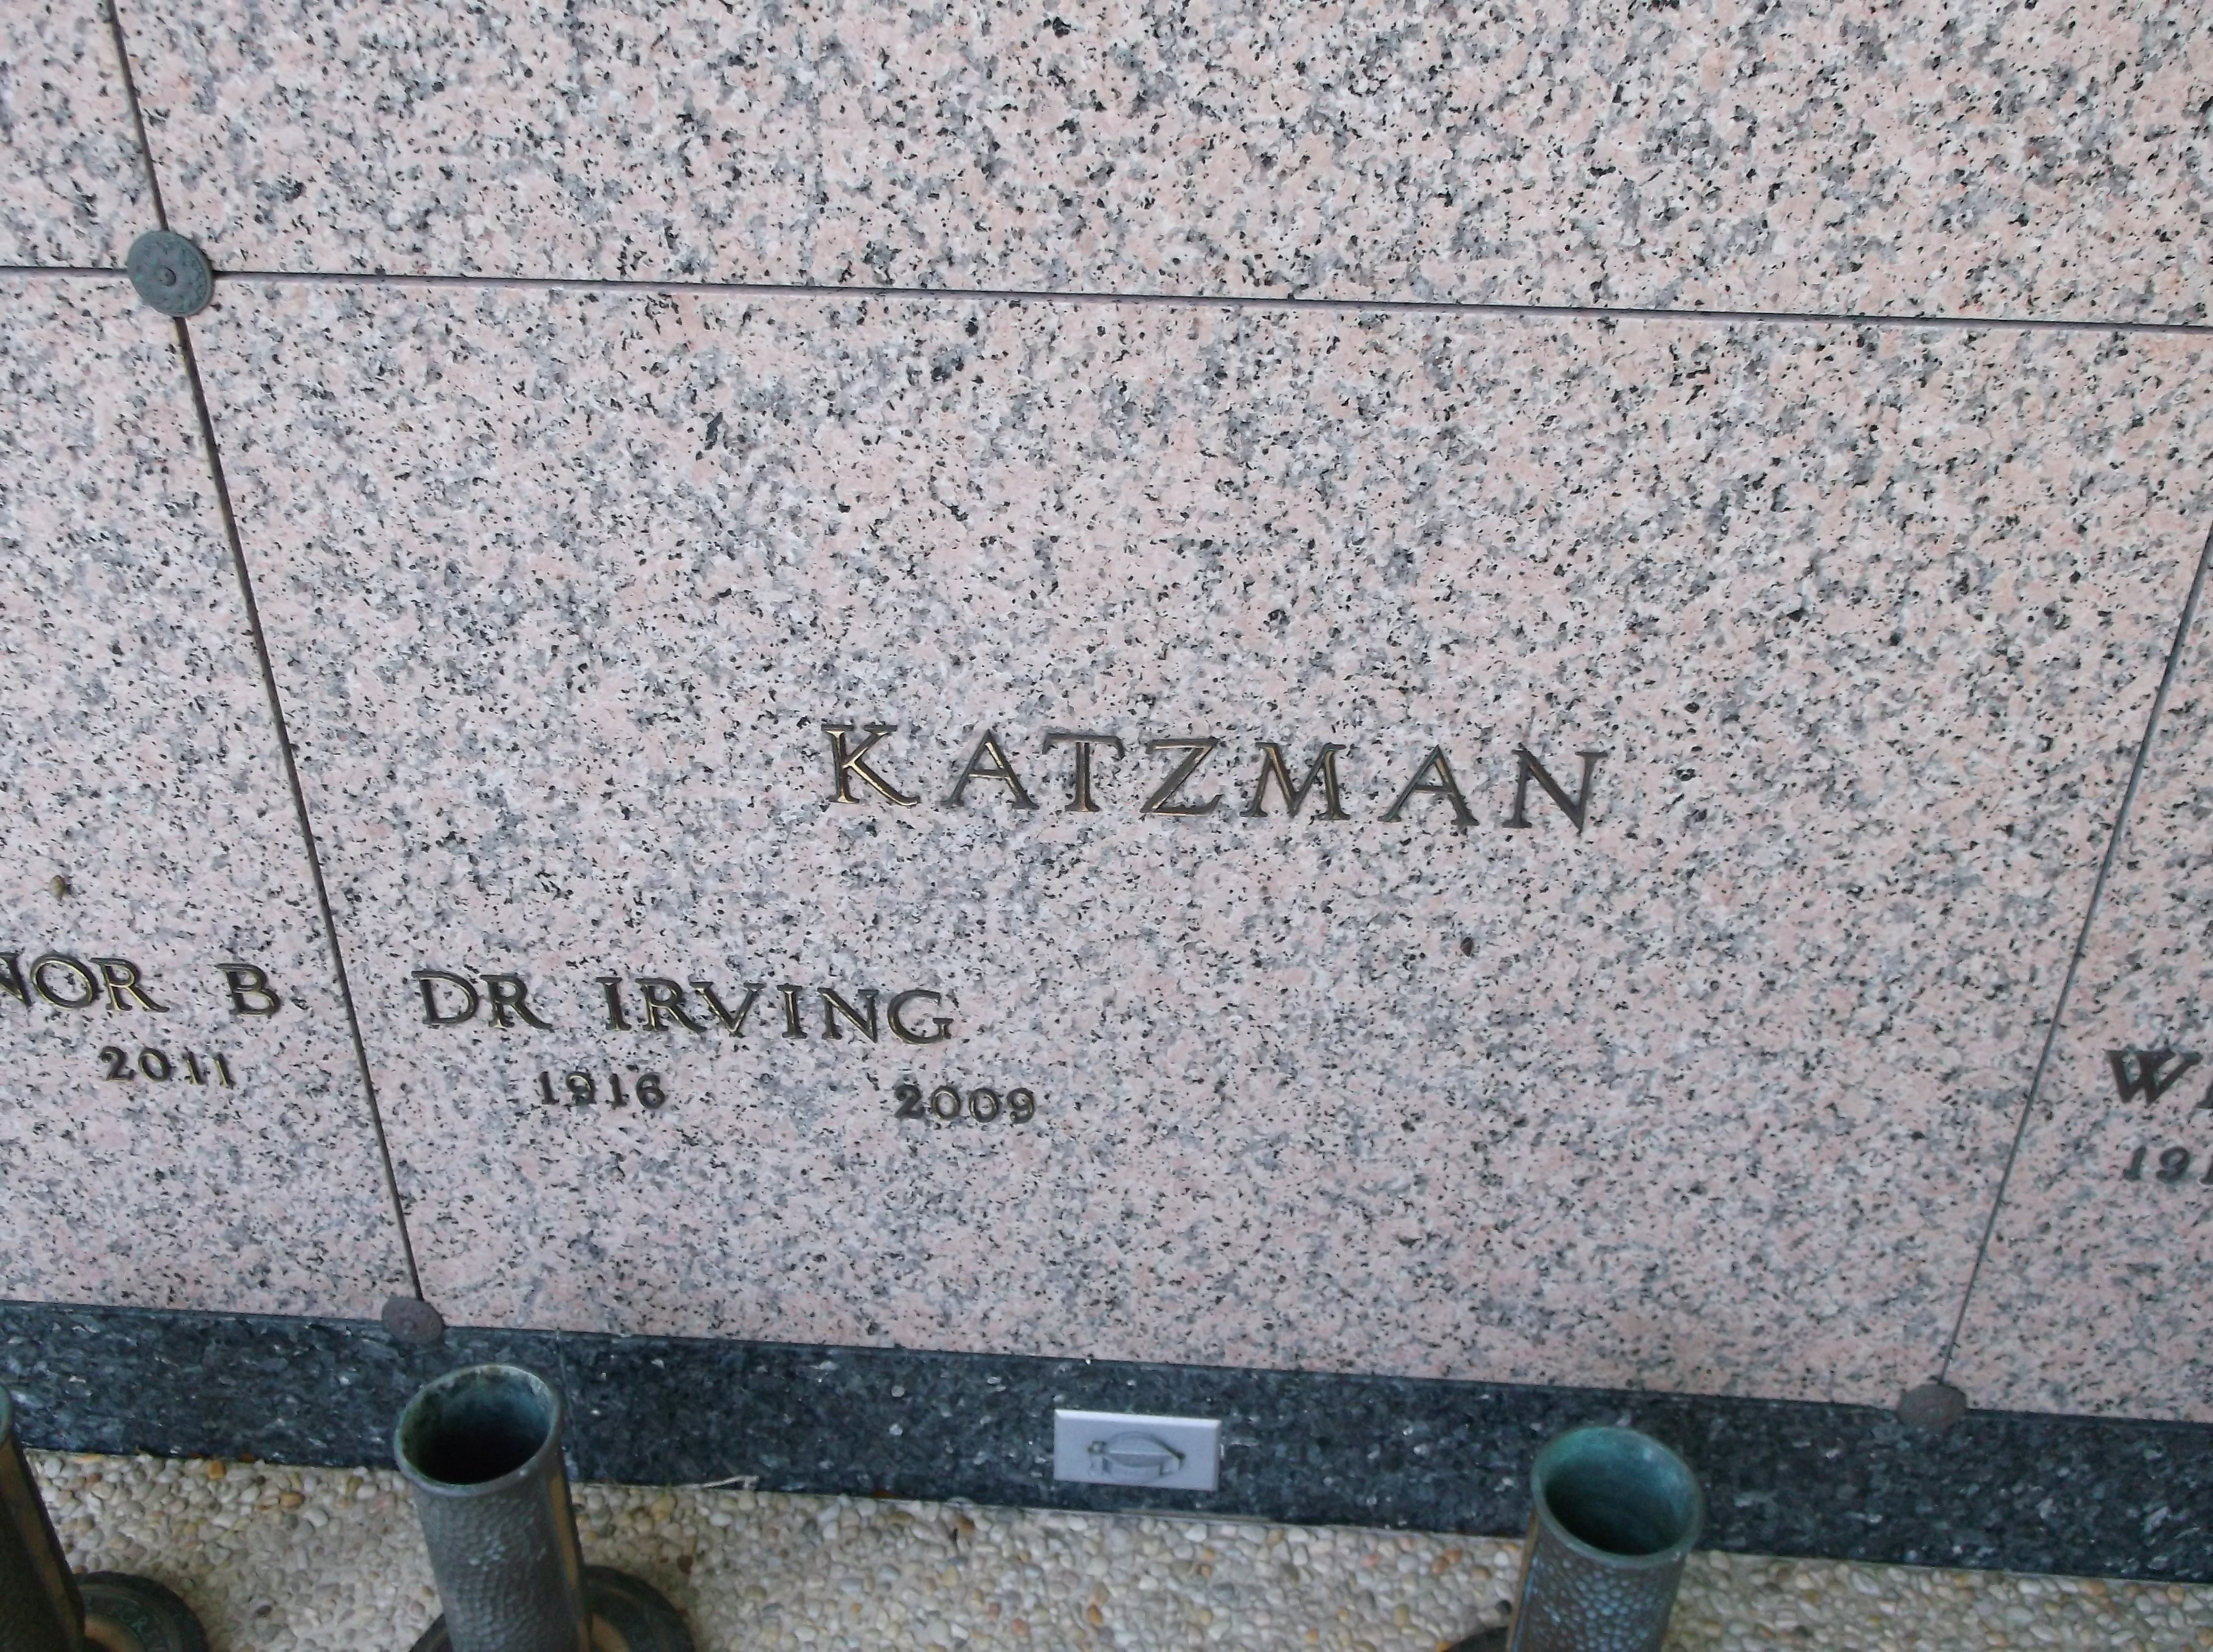 Dr Irving Katzman